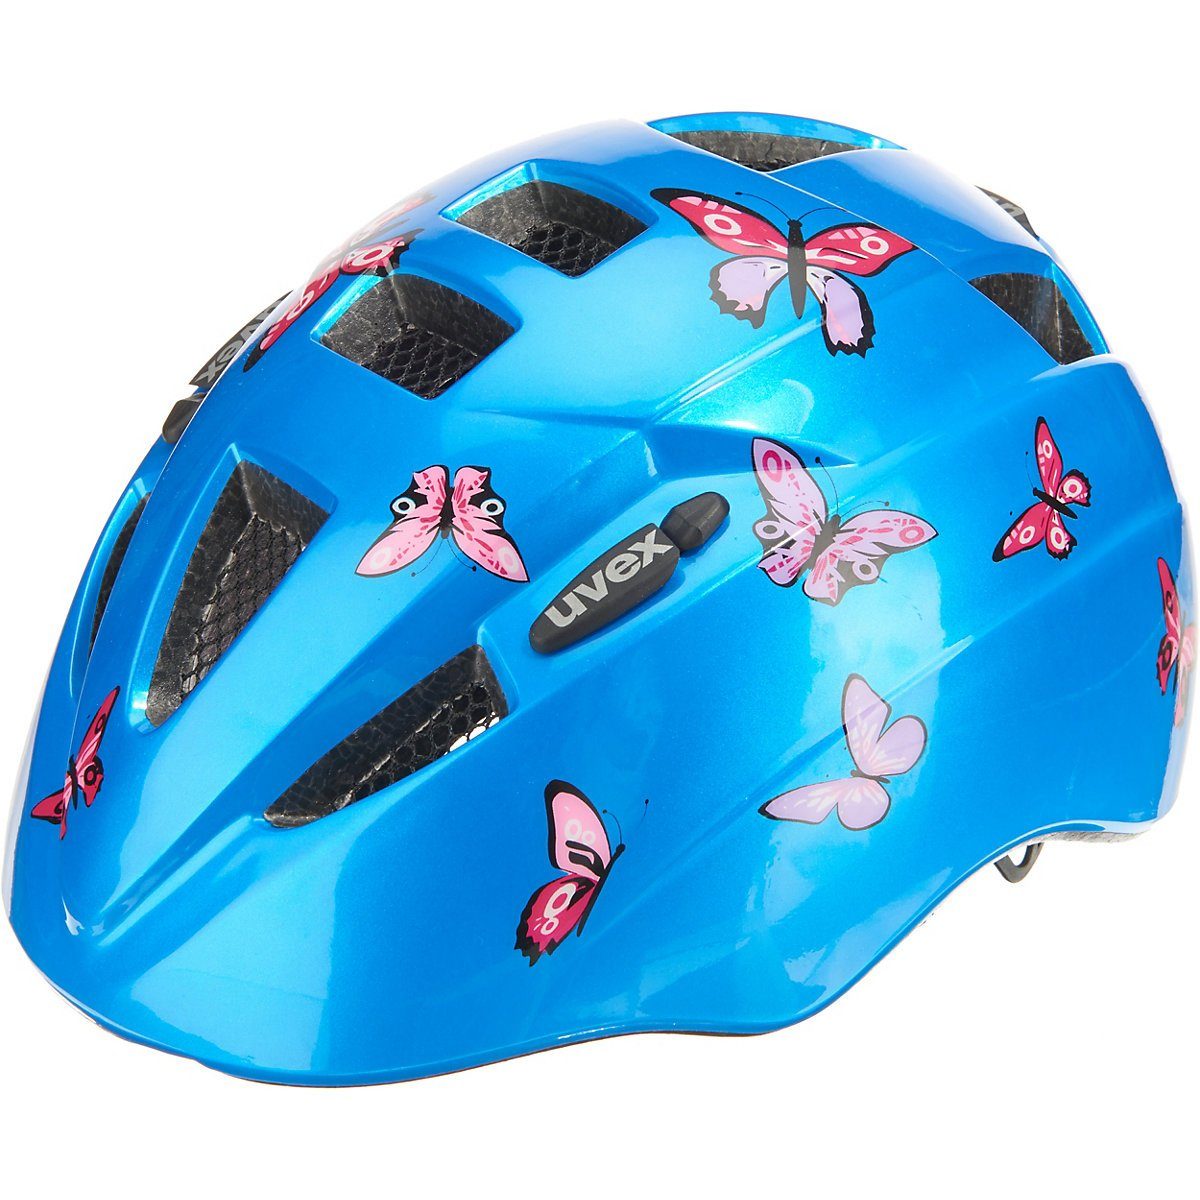 Uvex Fahrradhelm »Fahrradhelm kid 2 butterfly Gr. 46-52, blau/rosa«